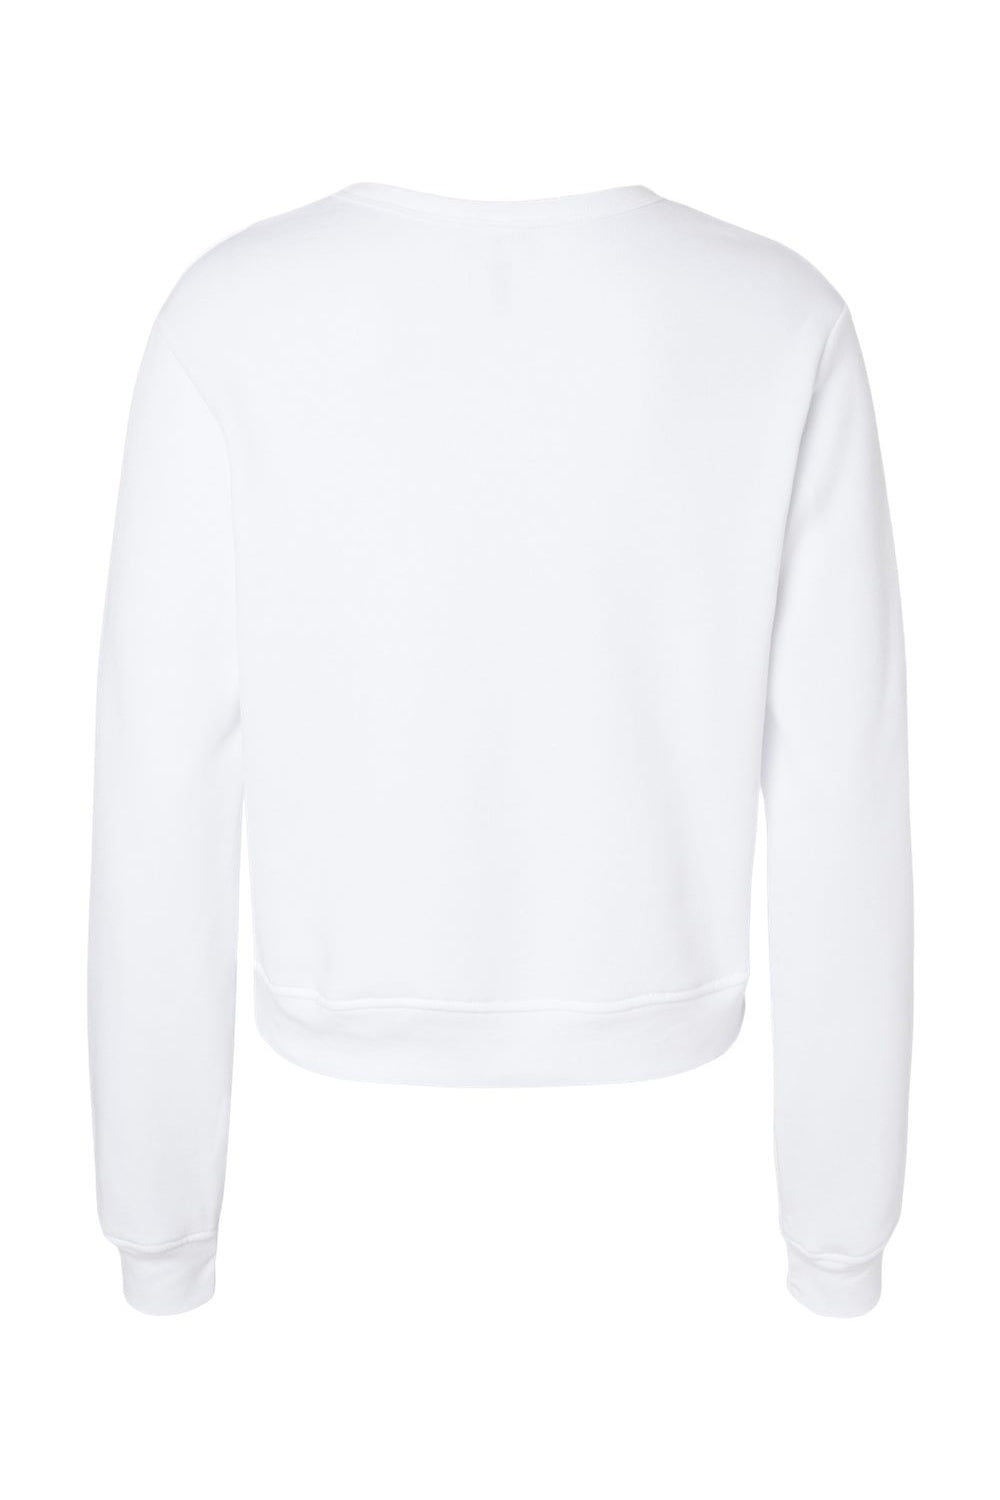 Bella + Canvas 7511 Womens Sponge Fleece Classic Crewneck Sweatshirt White Flat Back